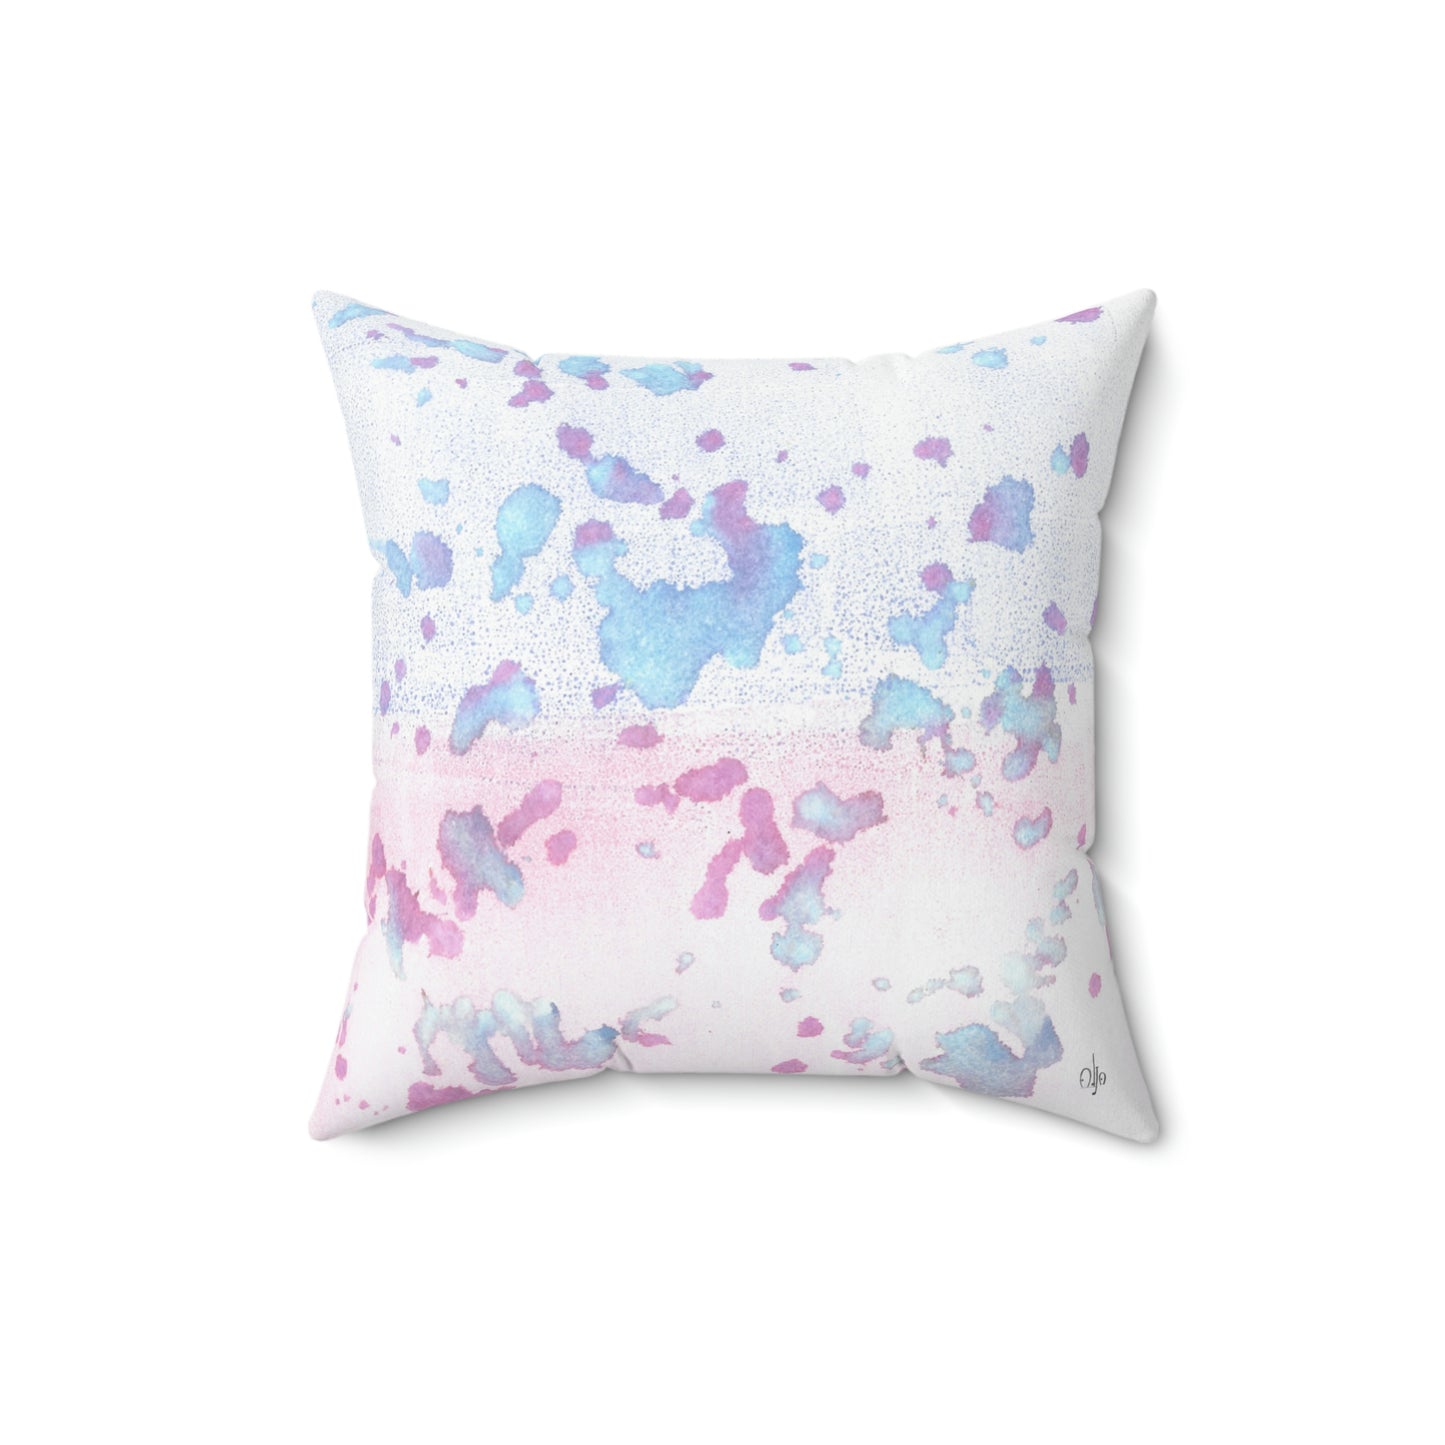 Mineral Splashes Square Pillow - Alja Design